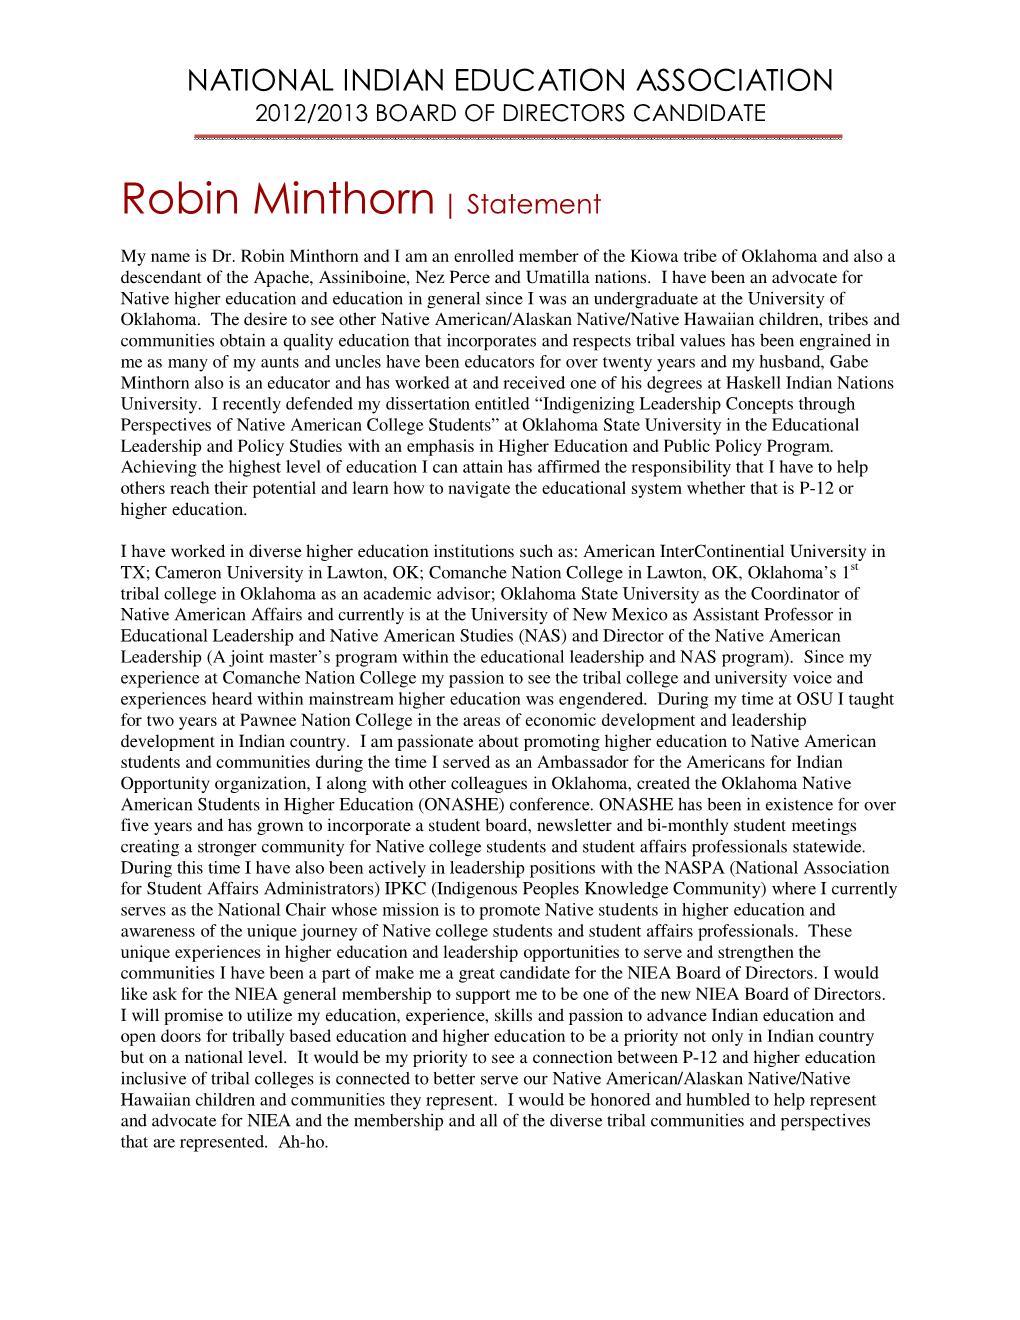 Robin Minthorn | Statement